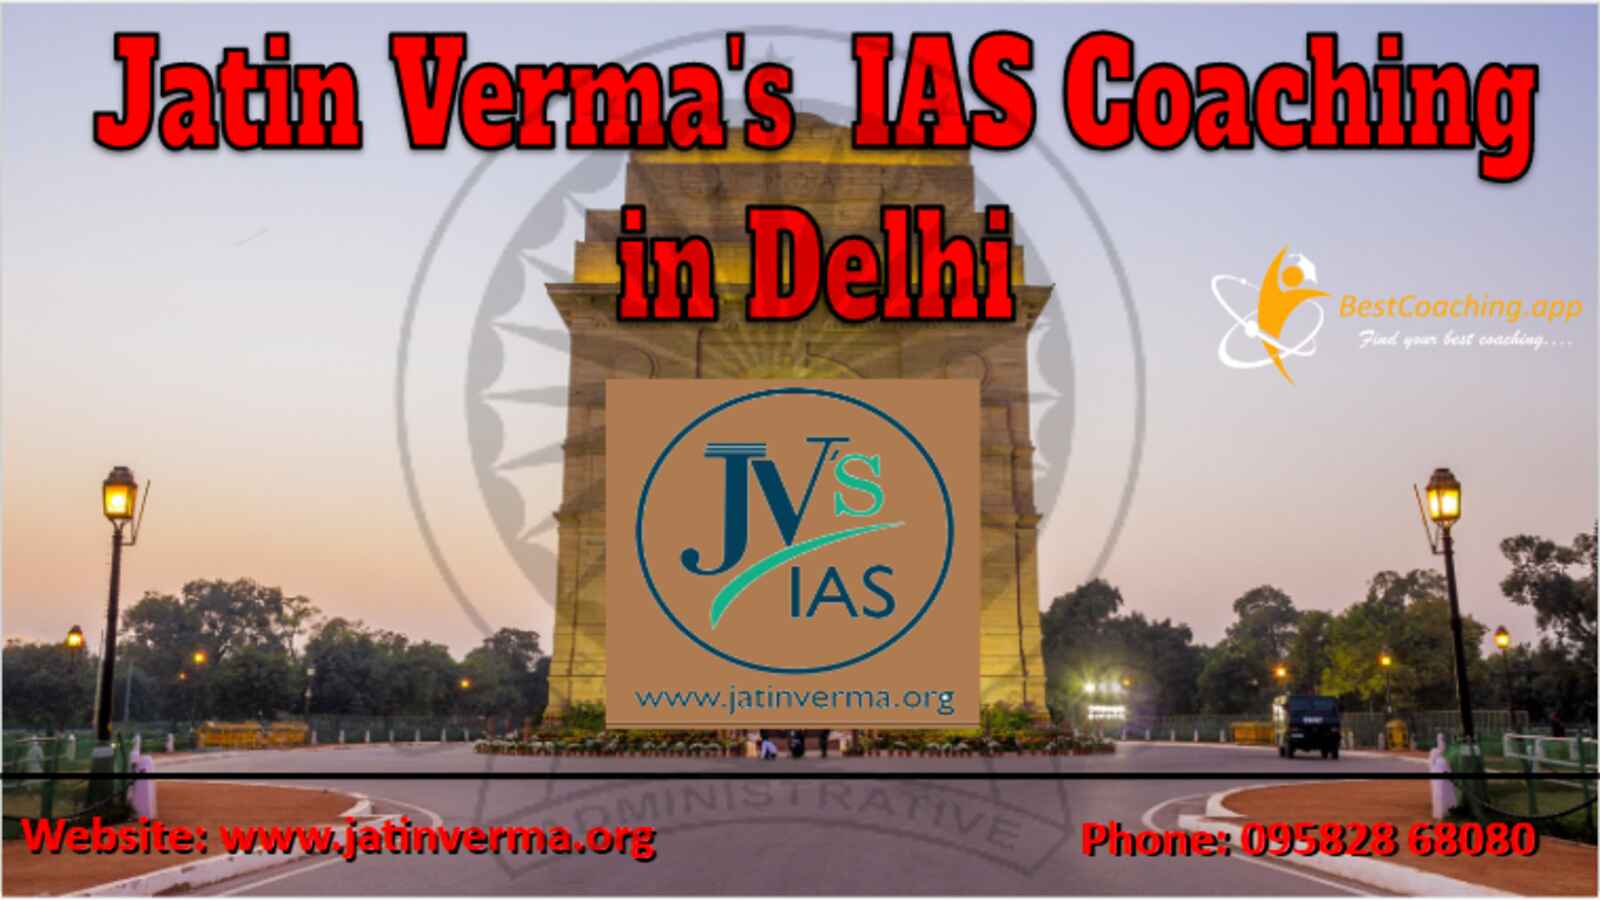 Jatin Verma's IAS Coaching in Delhi